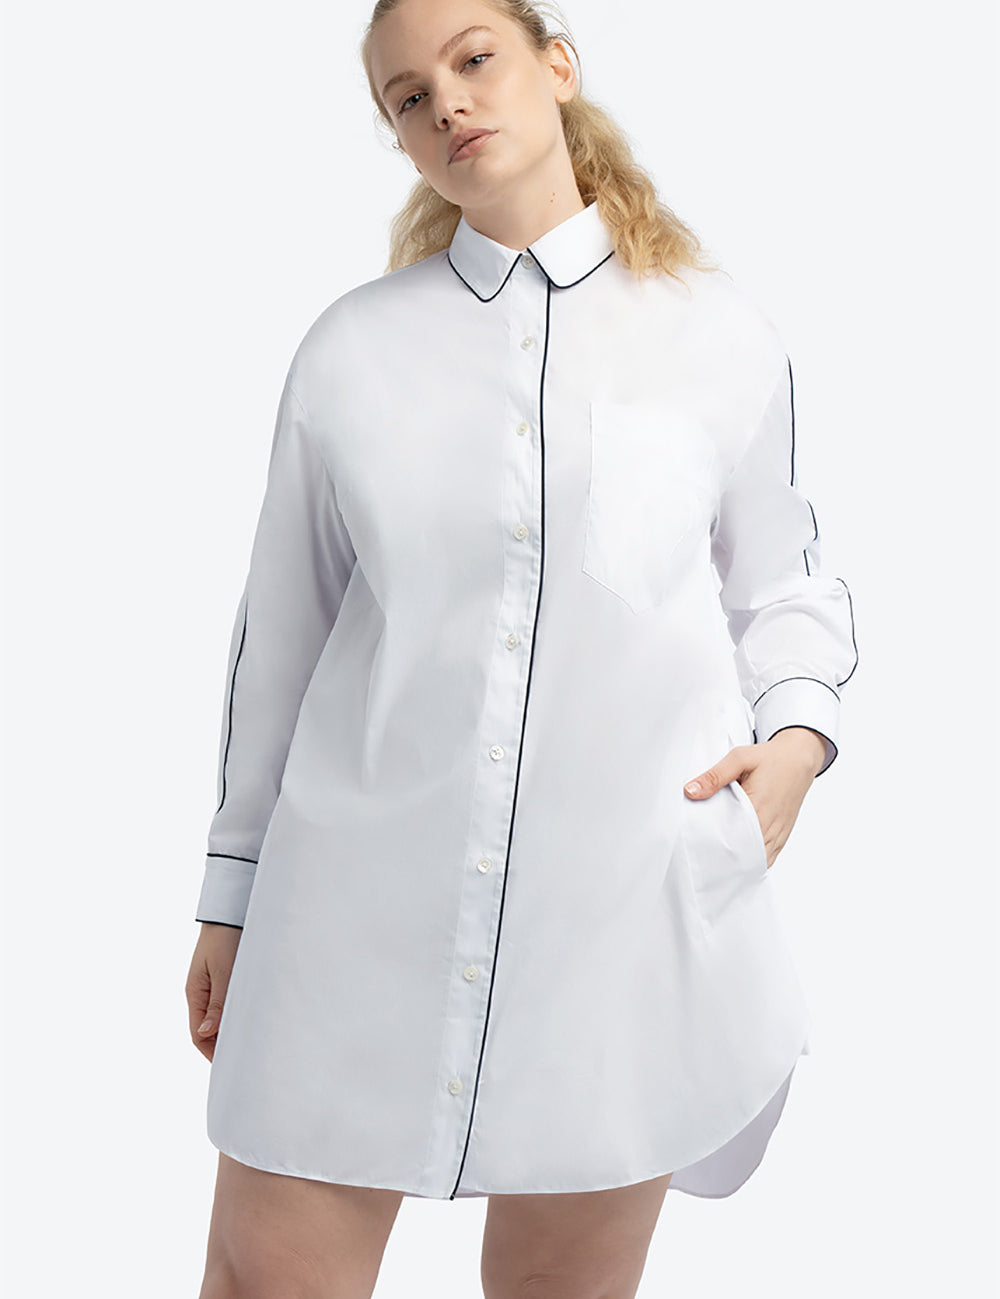 see-rose-go-quality-plus-size-white-tunic-shirt-dress_dca9d5bd-93f3-4b8c-838e-77dc1cb57416.jpg